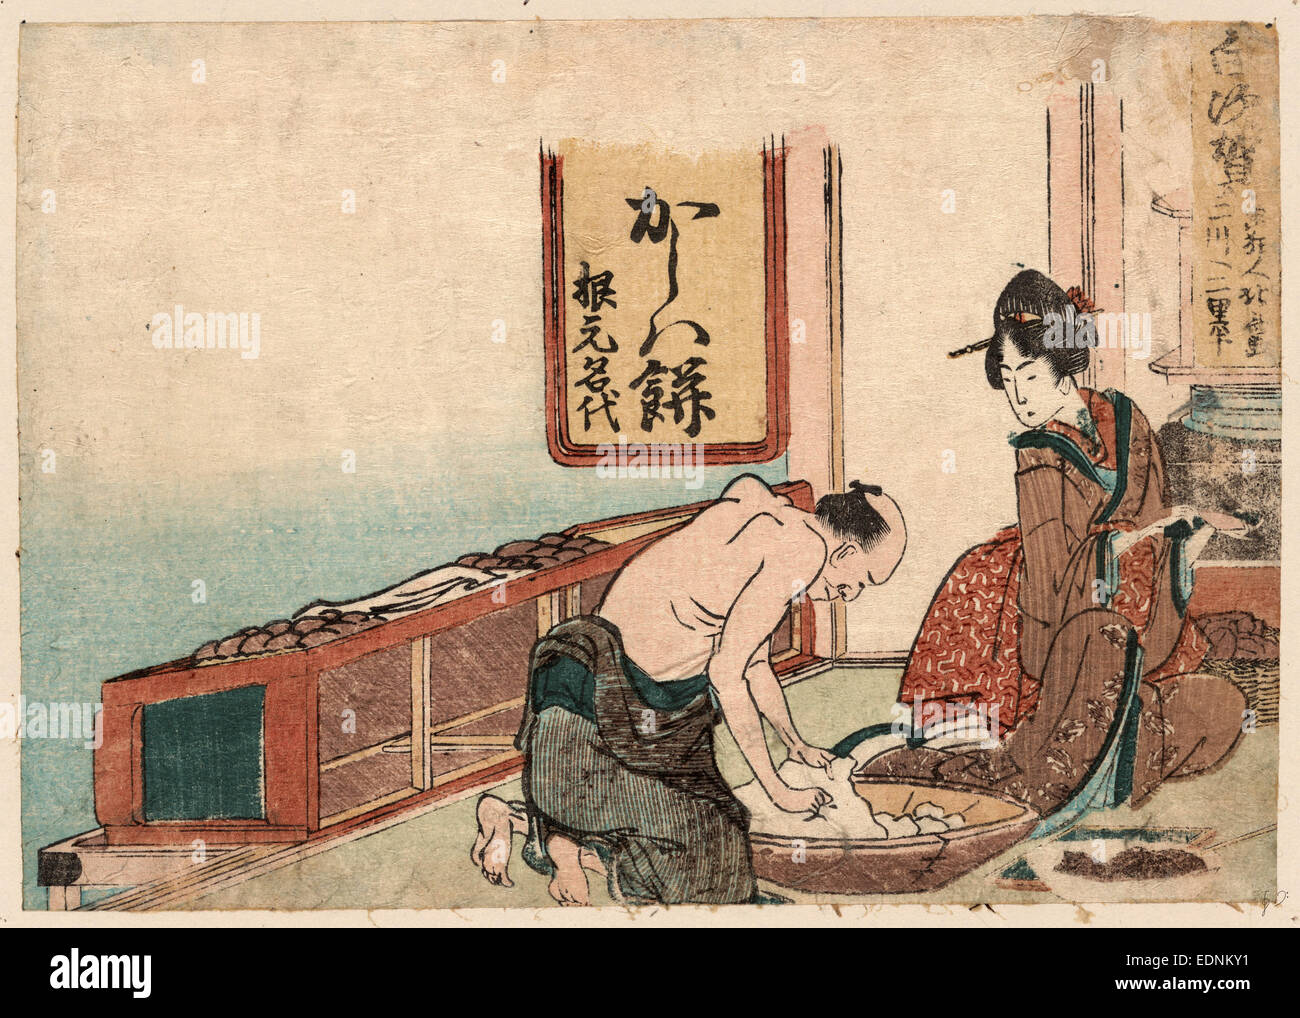 Shirasuka, Katsushika, Hokusai, 1760-1849, artist, 1804., 1 print : woodcut, color ; 11.2 x 15.9 cm., Print shows a man and a woman in domestic setting with bowl of fabric or clay. Stock Photo